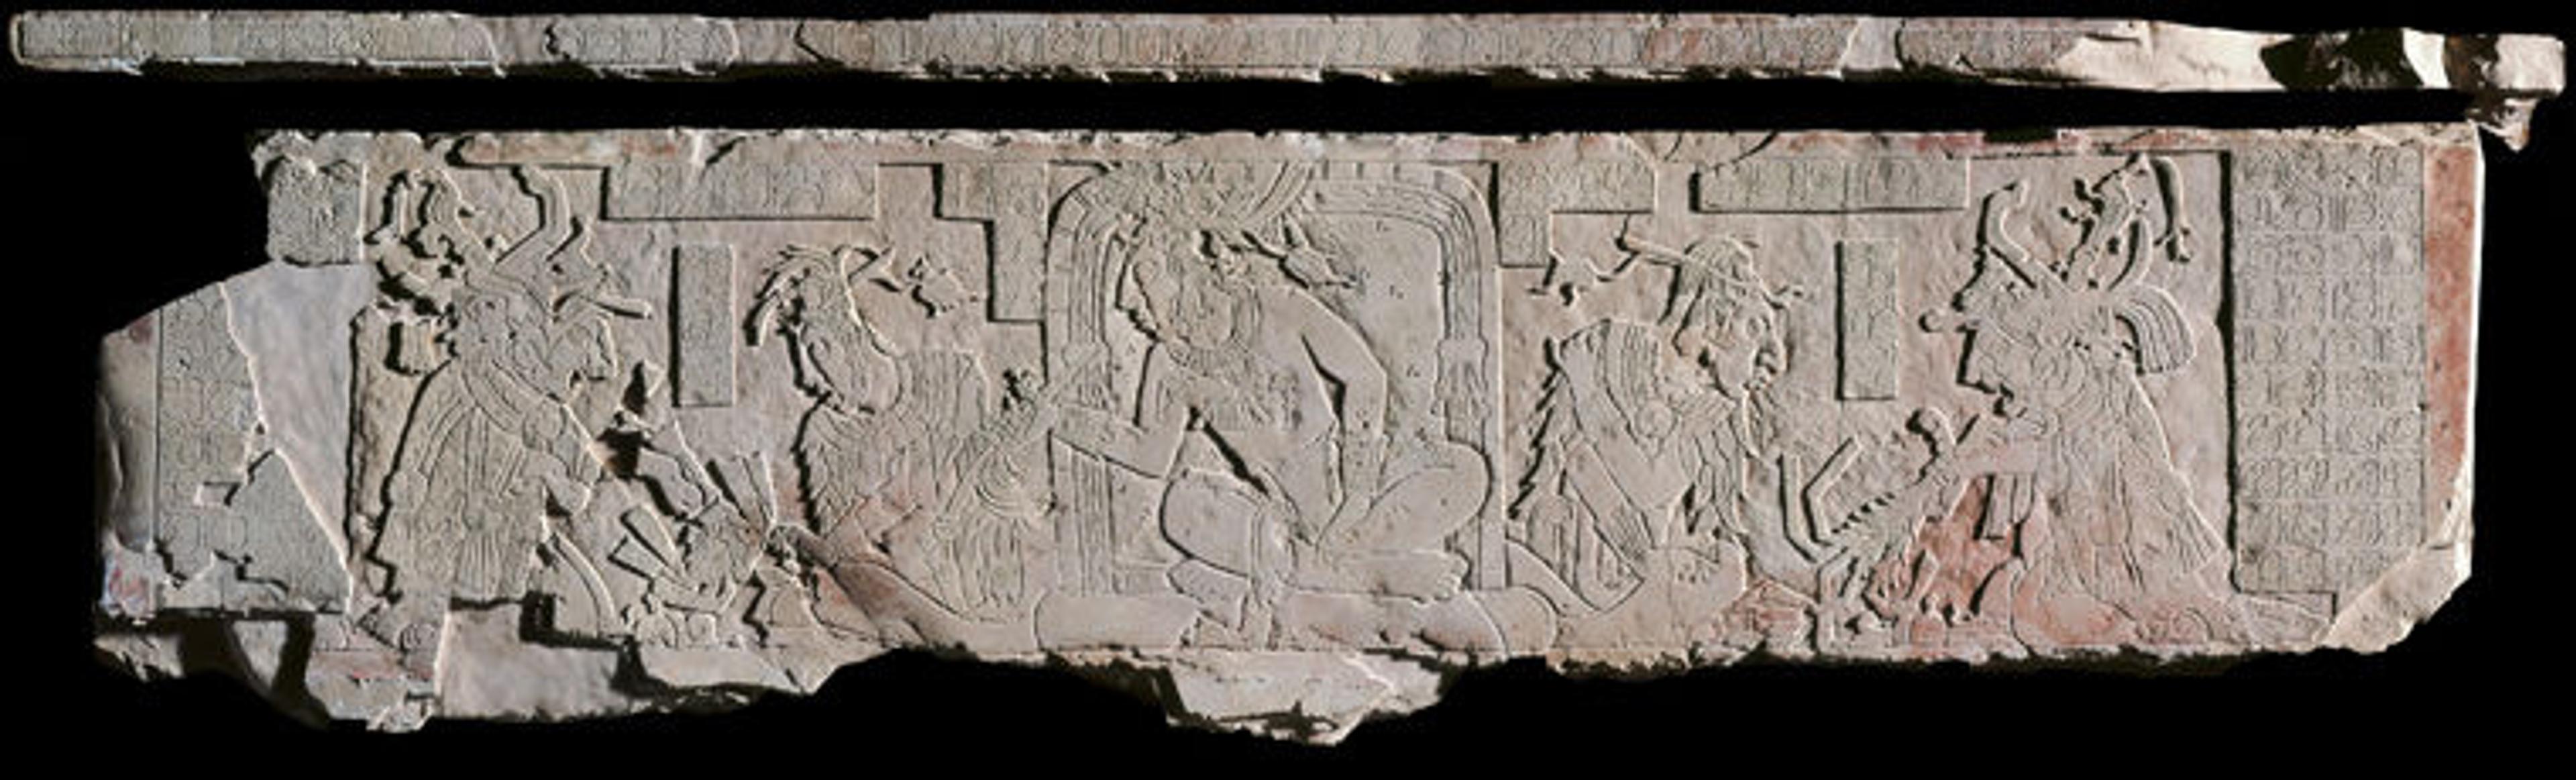 Stone platform panel made by Maya sculptors